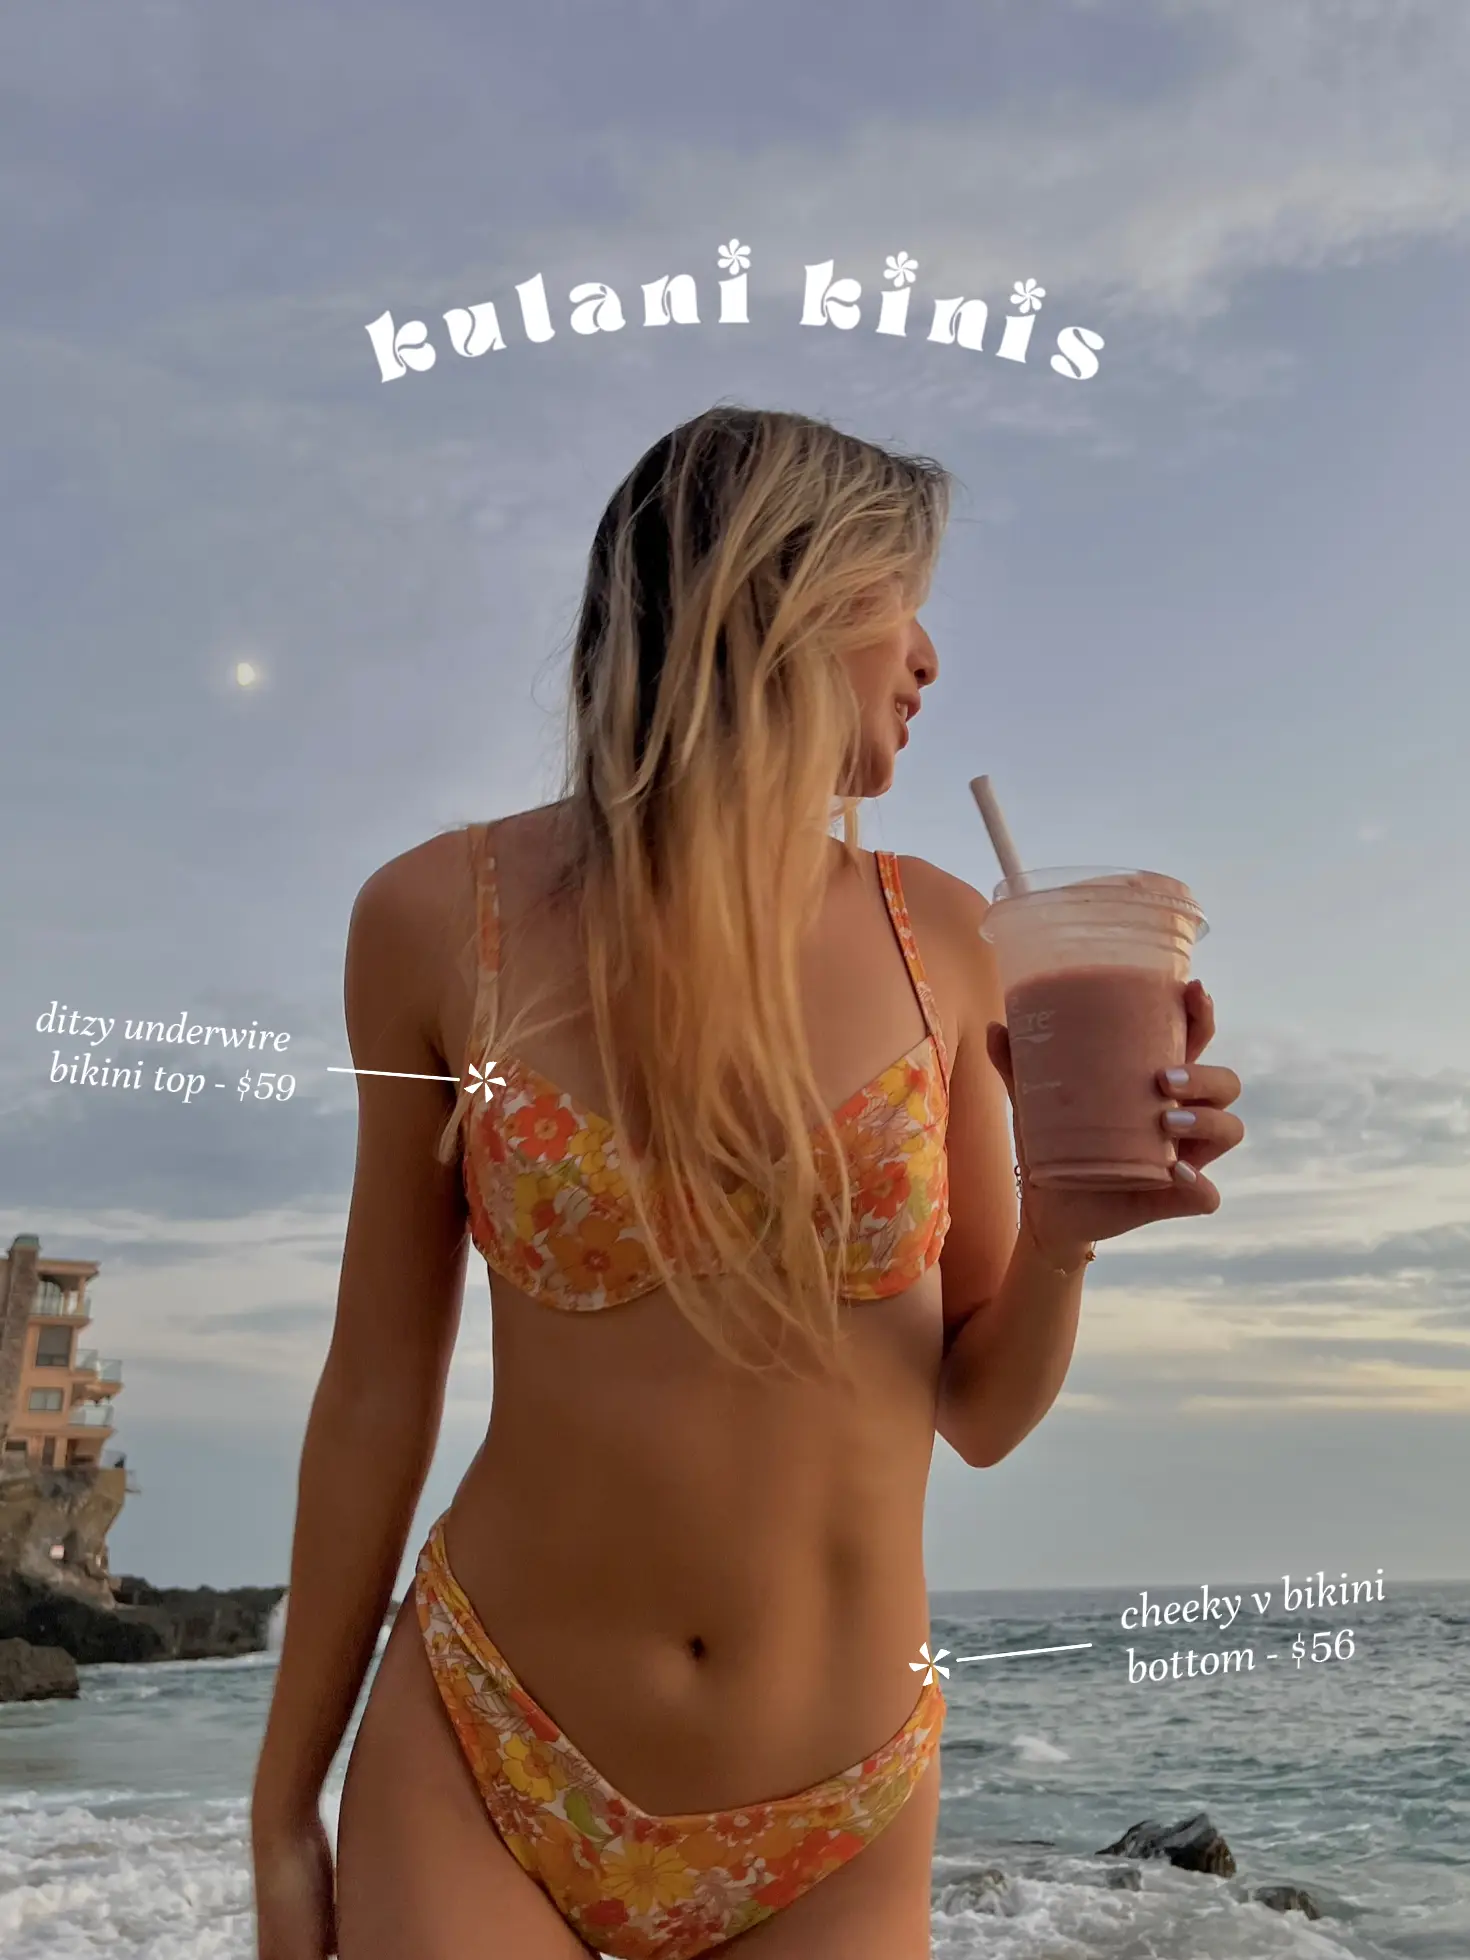 Ditzy Underwire Bra Bikini Top - Caribbean Blues –KulaniKinisEurope